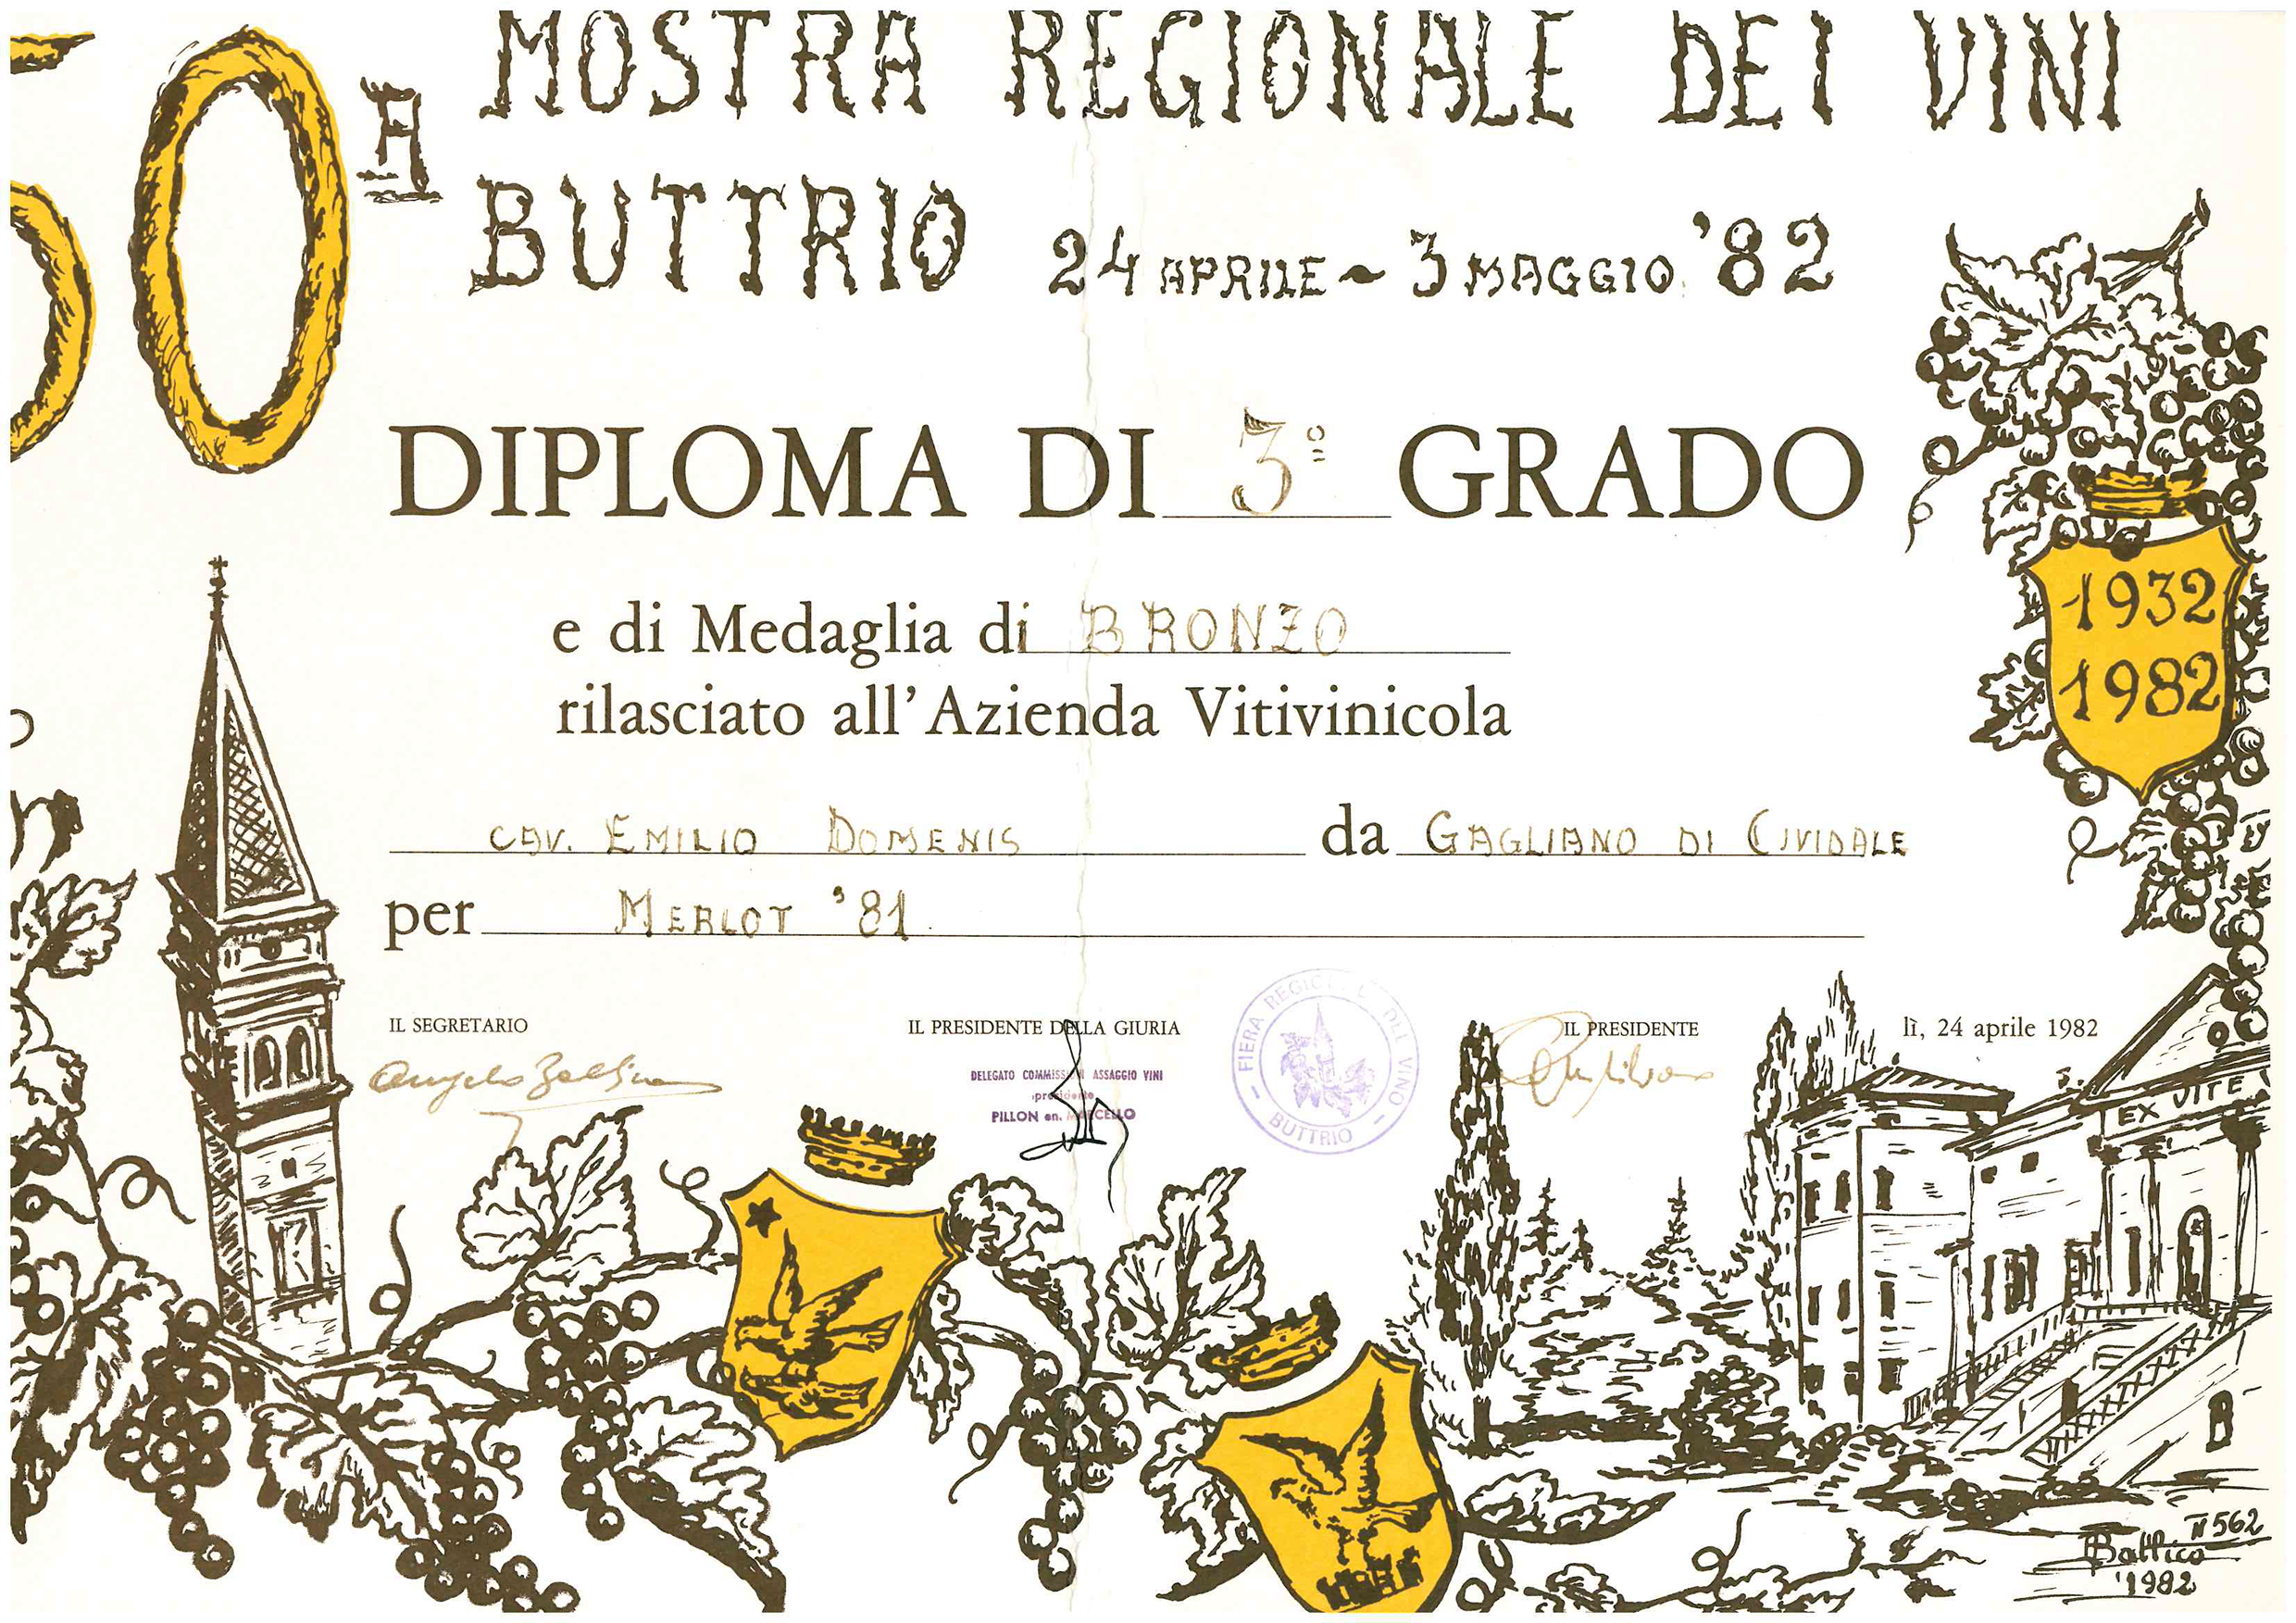 Mostra Regionale dei Vini Buttrio 1982 – Merlot ’81